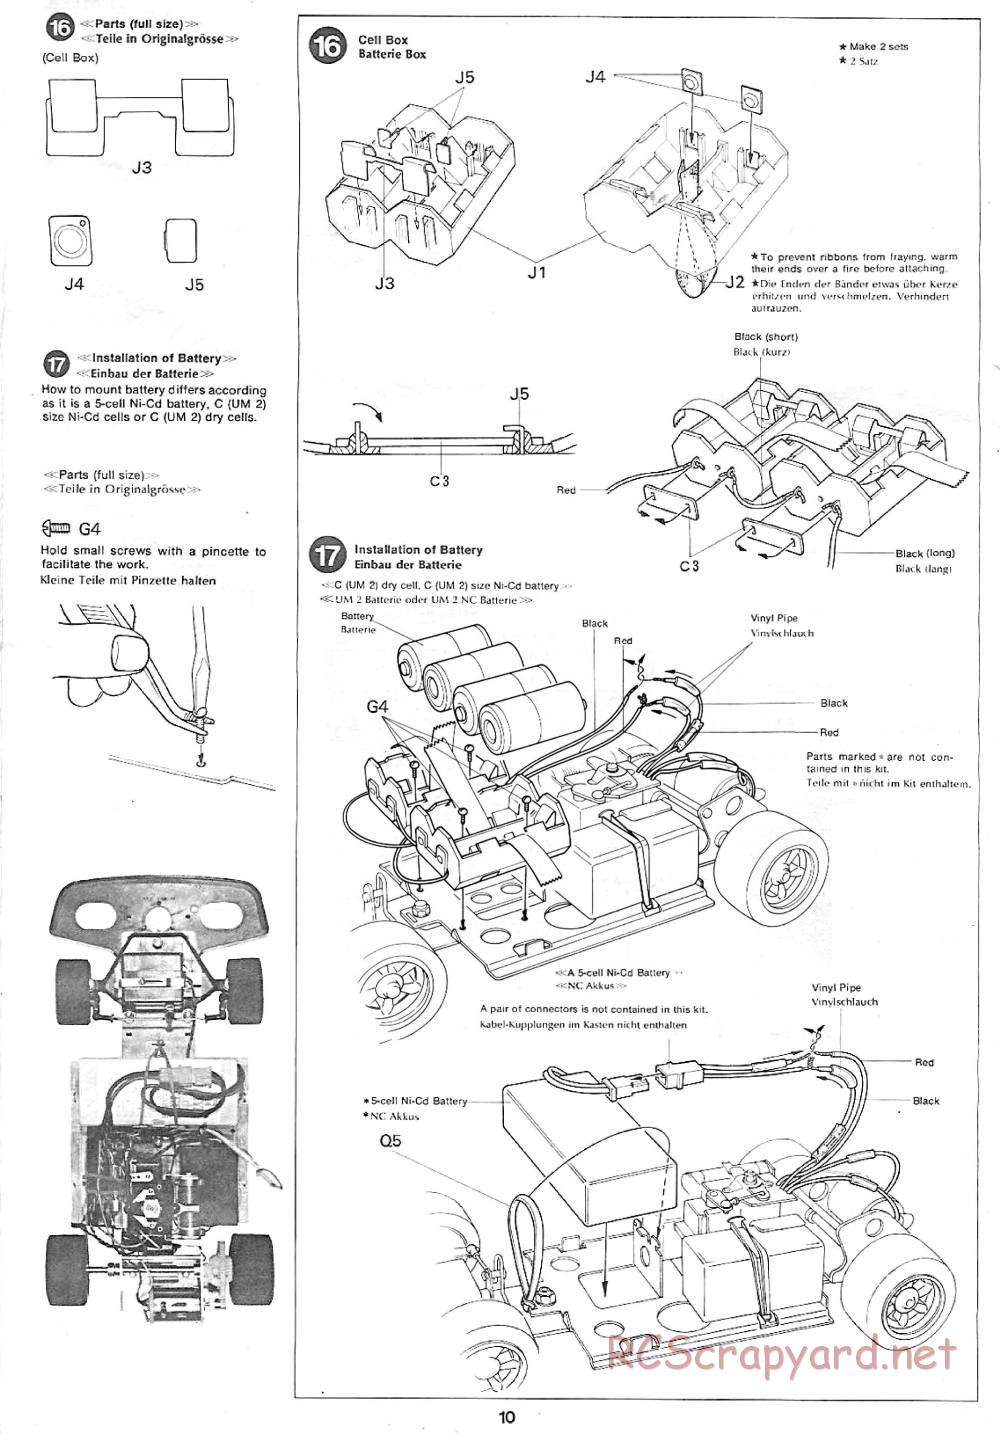 Tamiya - Martini Porsche 936 Turbo - 58006 - Manual - Page 10